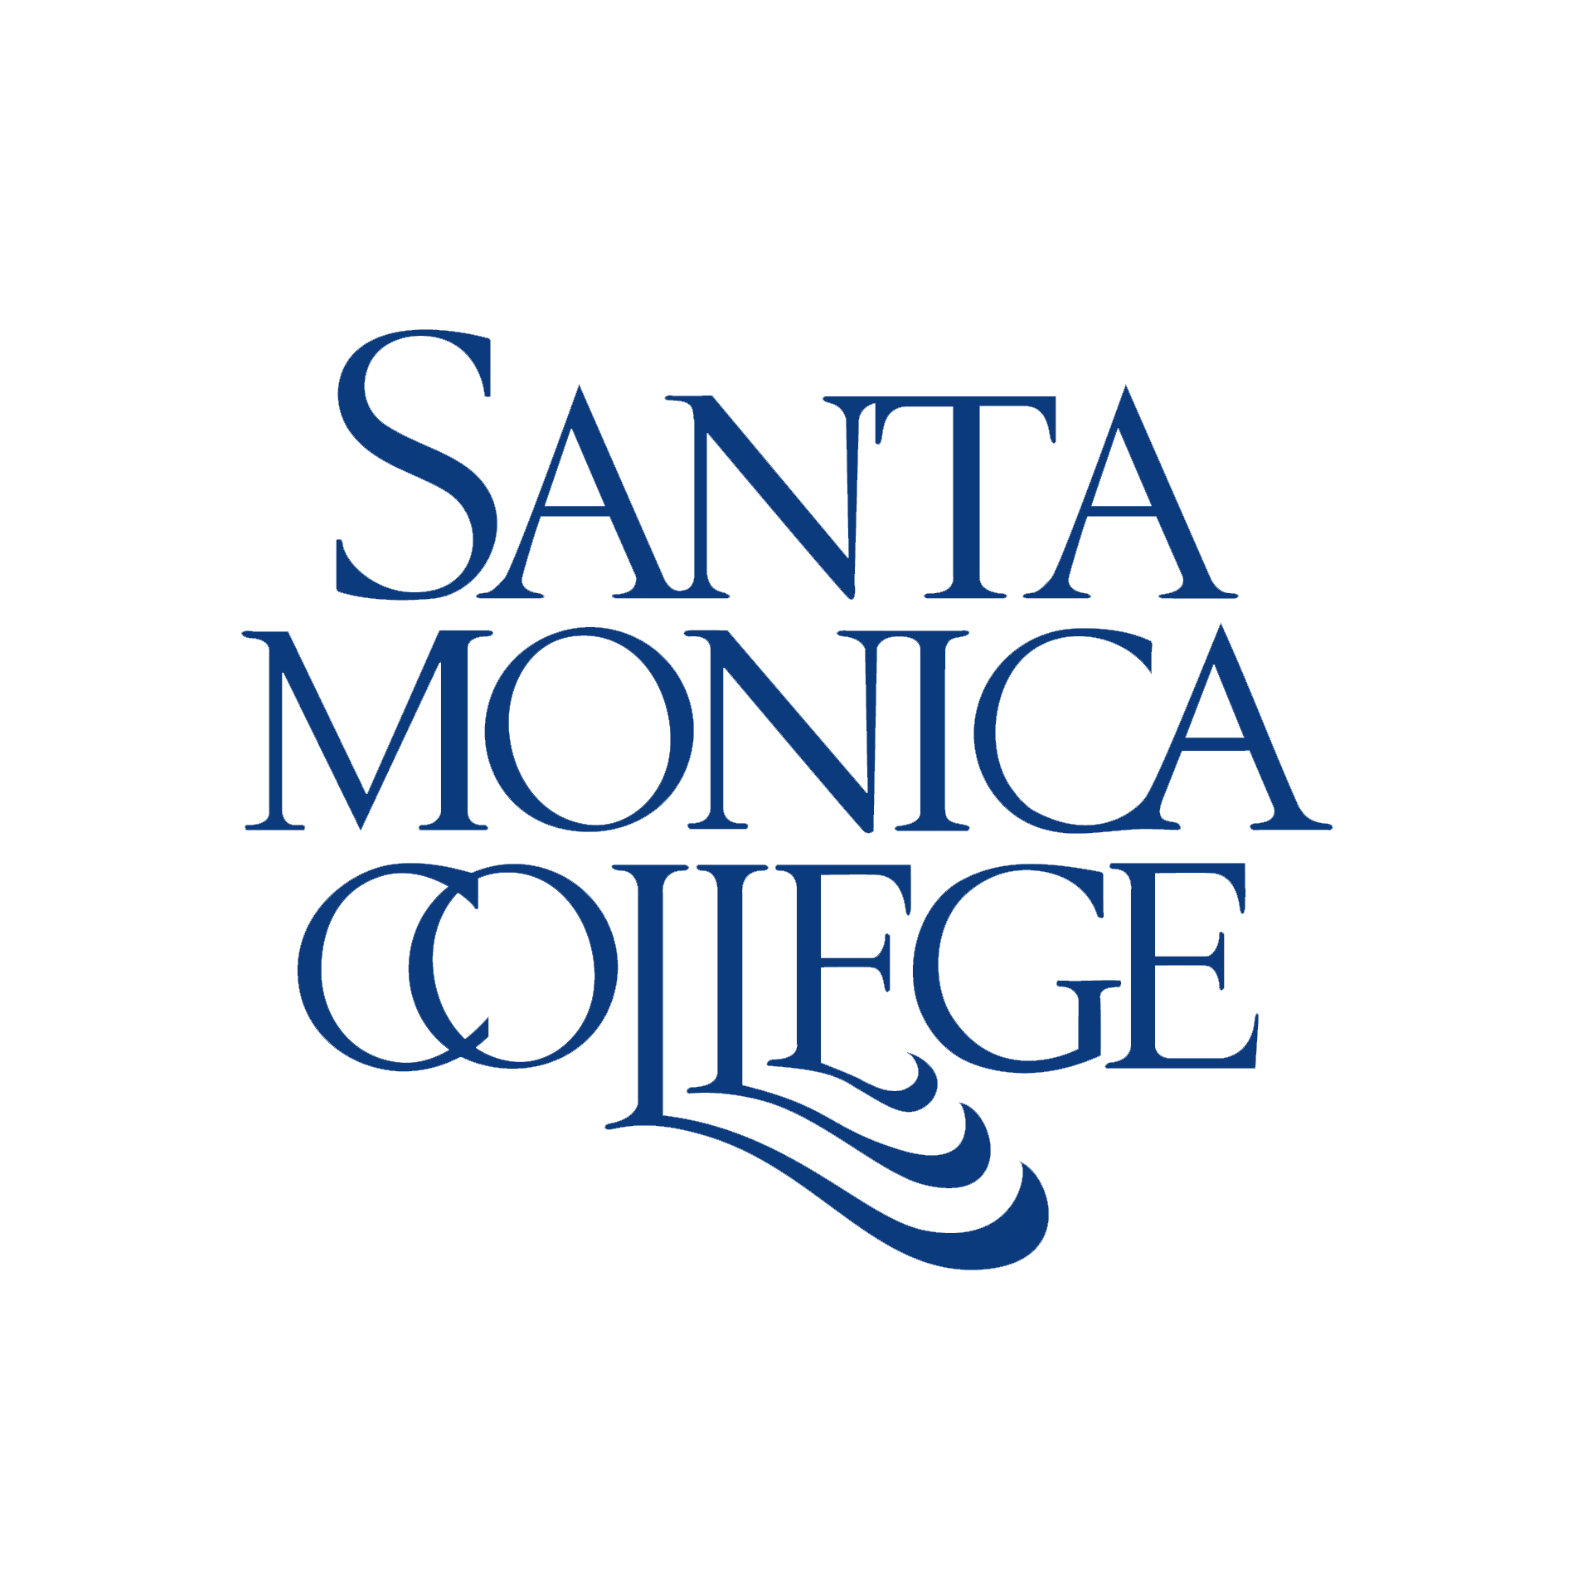   Santa Monica College, Strategic Plan, 2017   